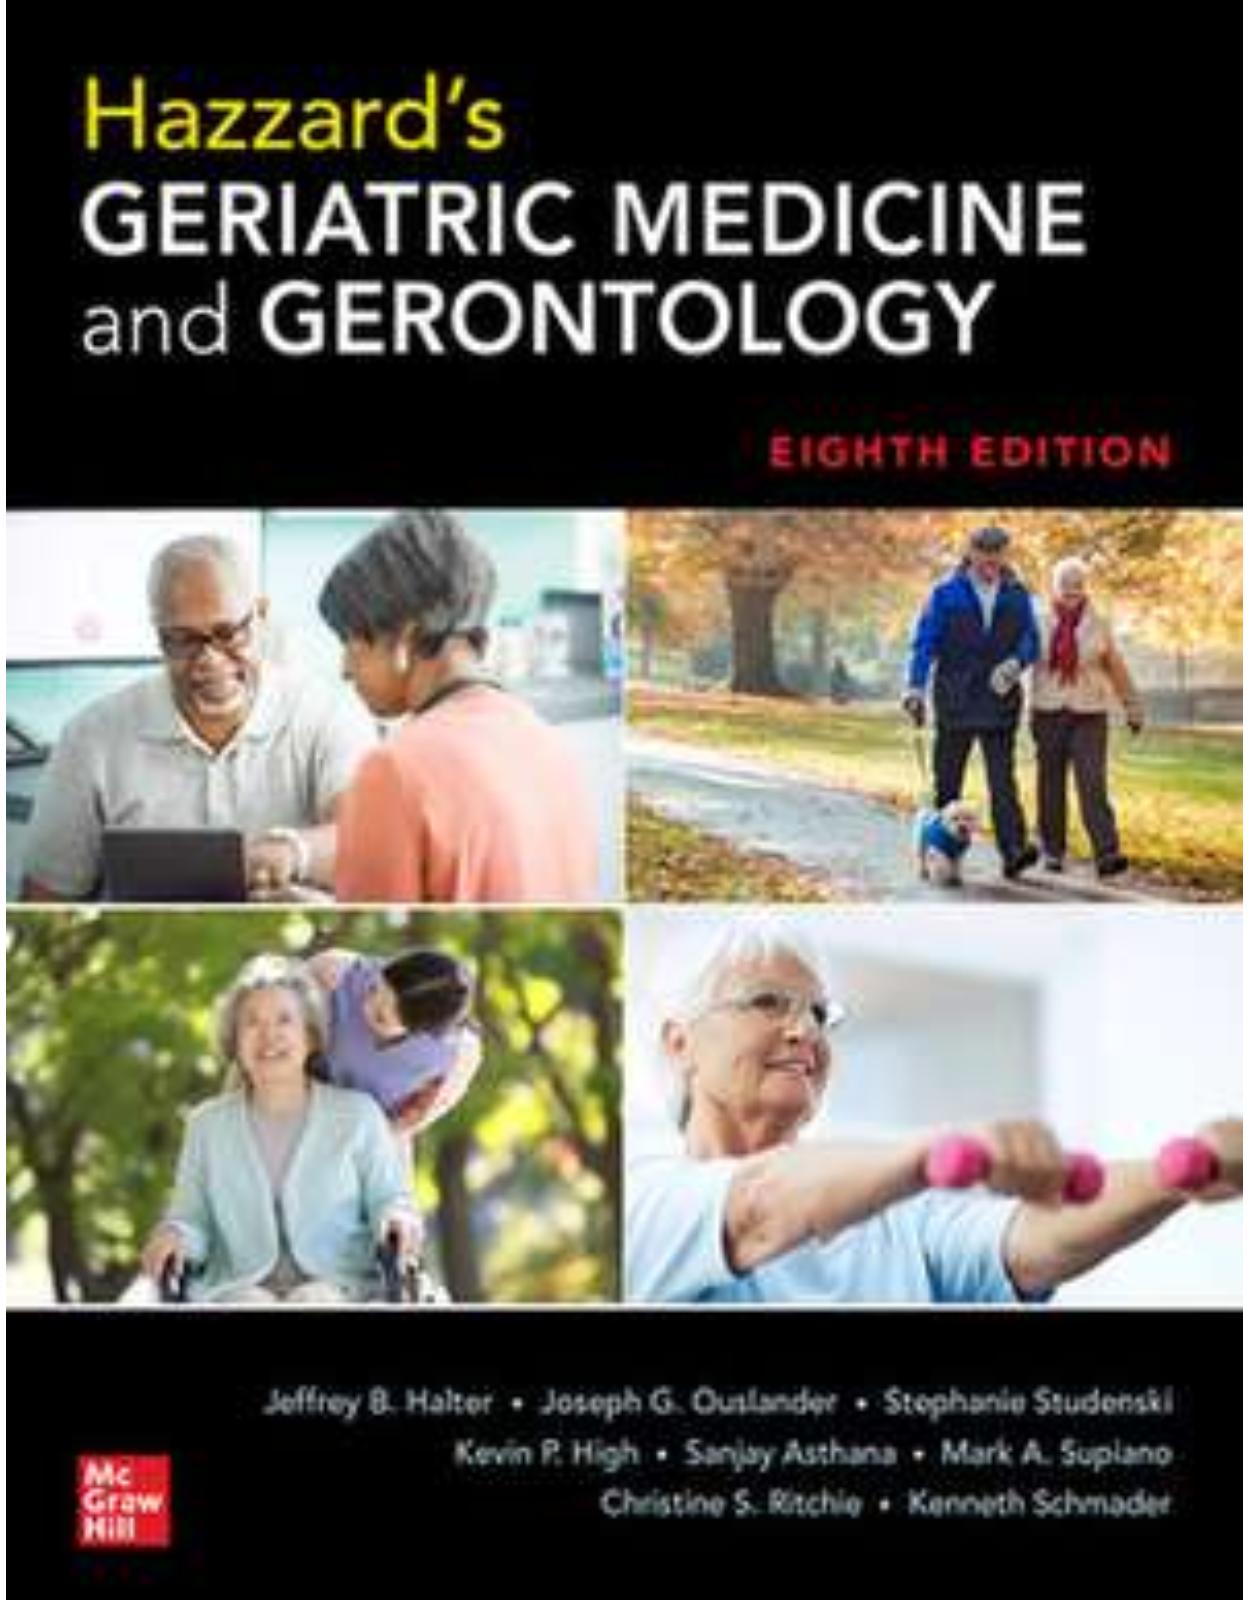 Hazzard’s Geriatric Medicine and Gerontology, Eighth Edition